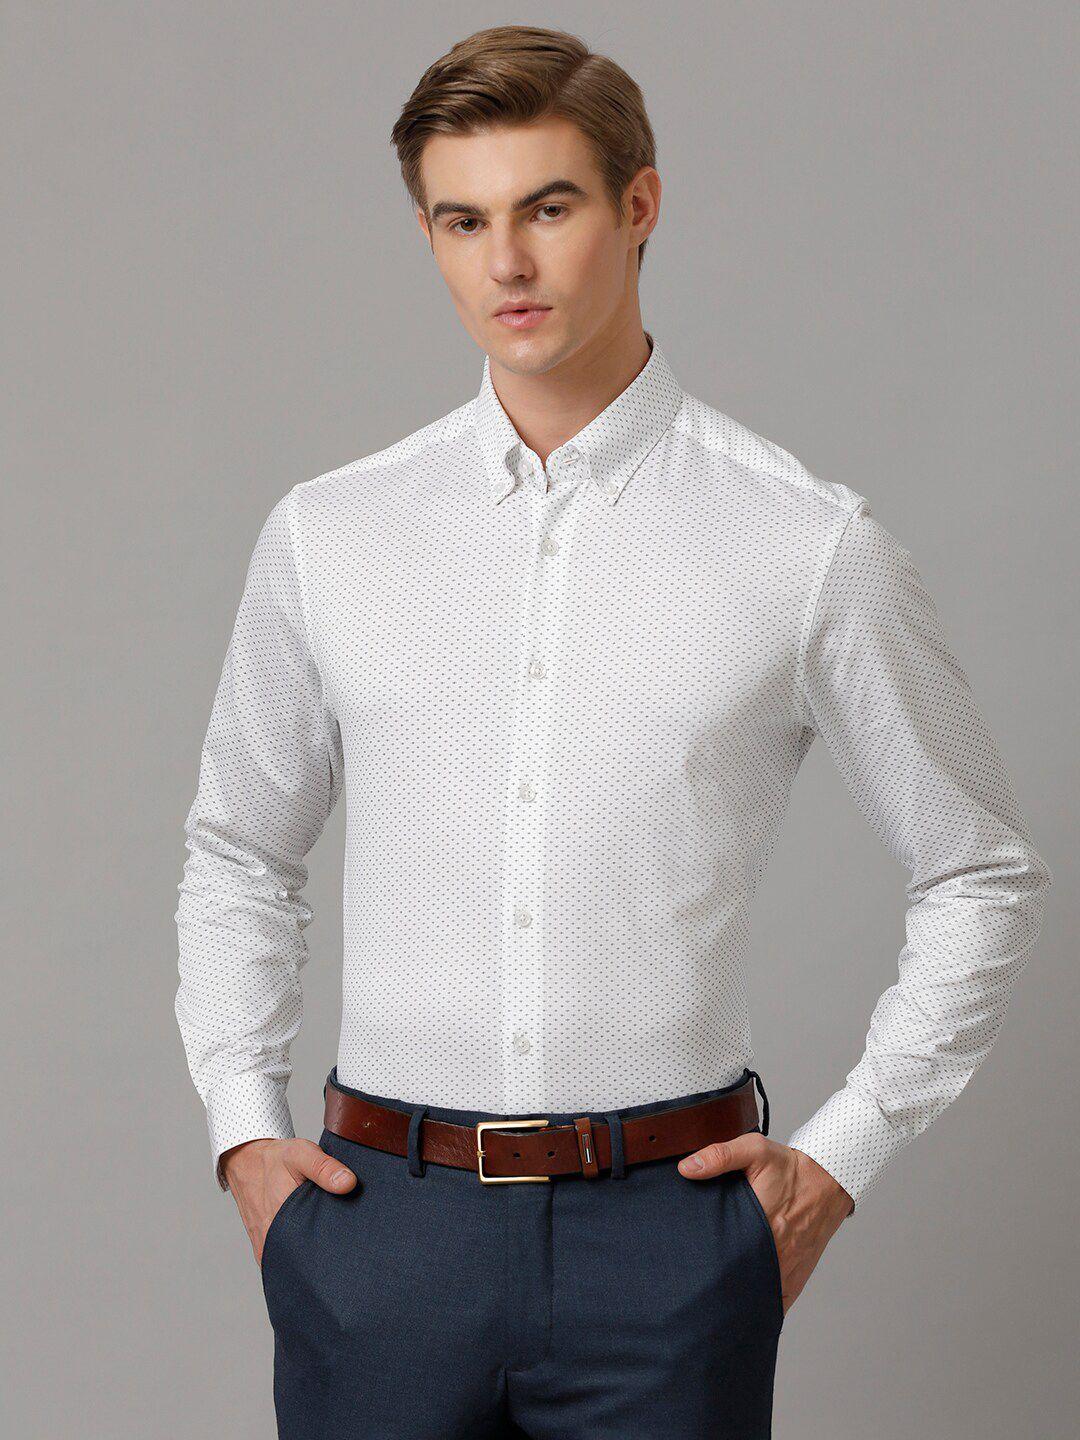 aldeno men white comfort opaque formal shirt